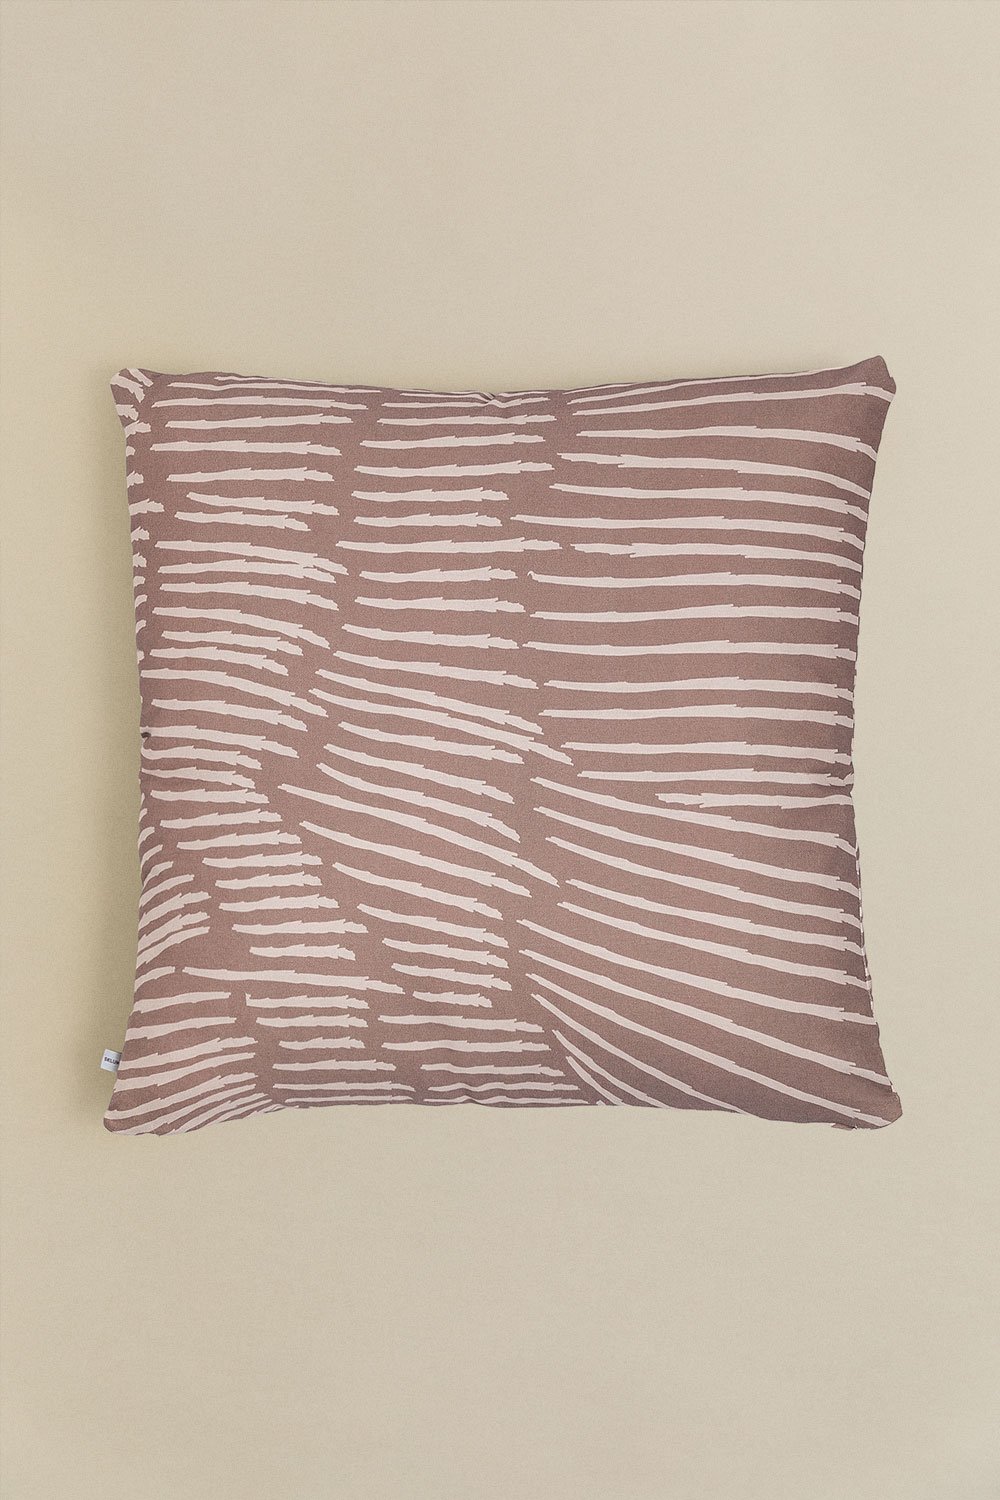 Square Cotton Cushion Cover (60x60cm) Ubongo Style, gallery image 1